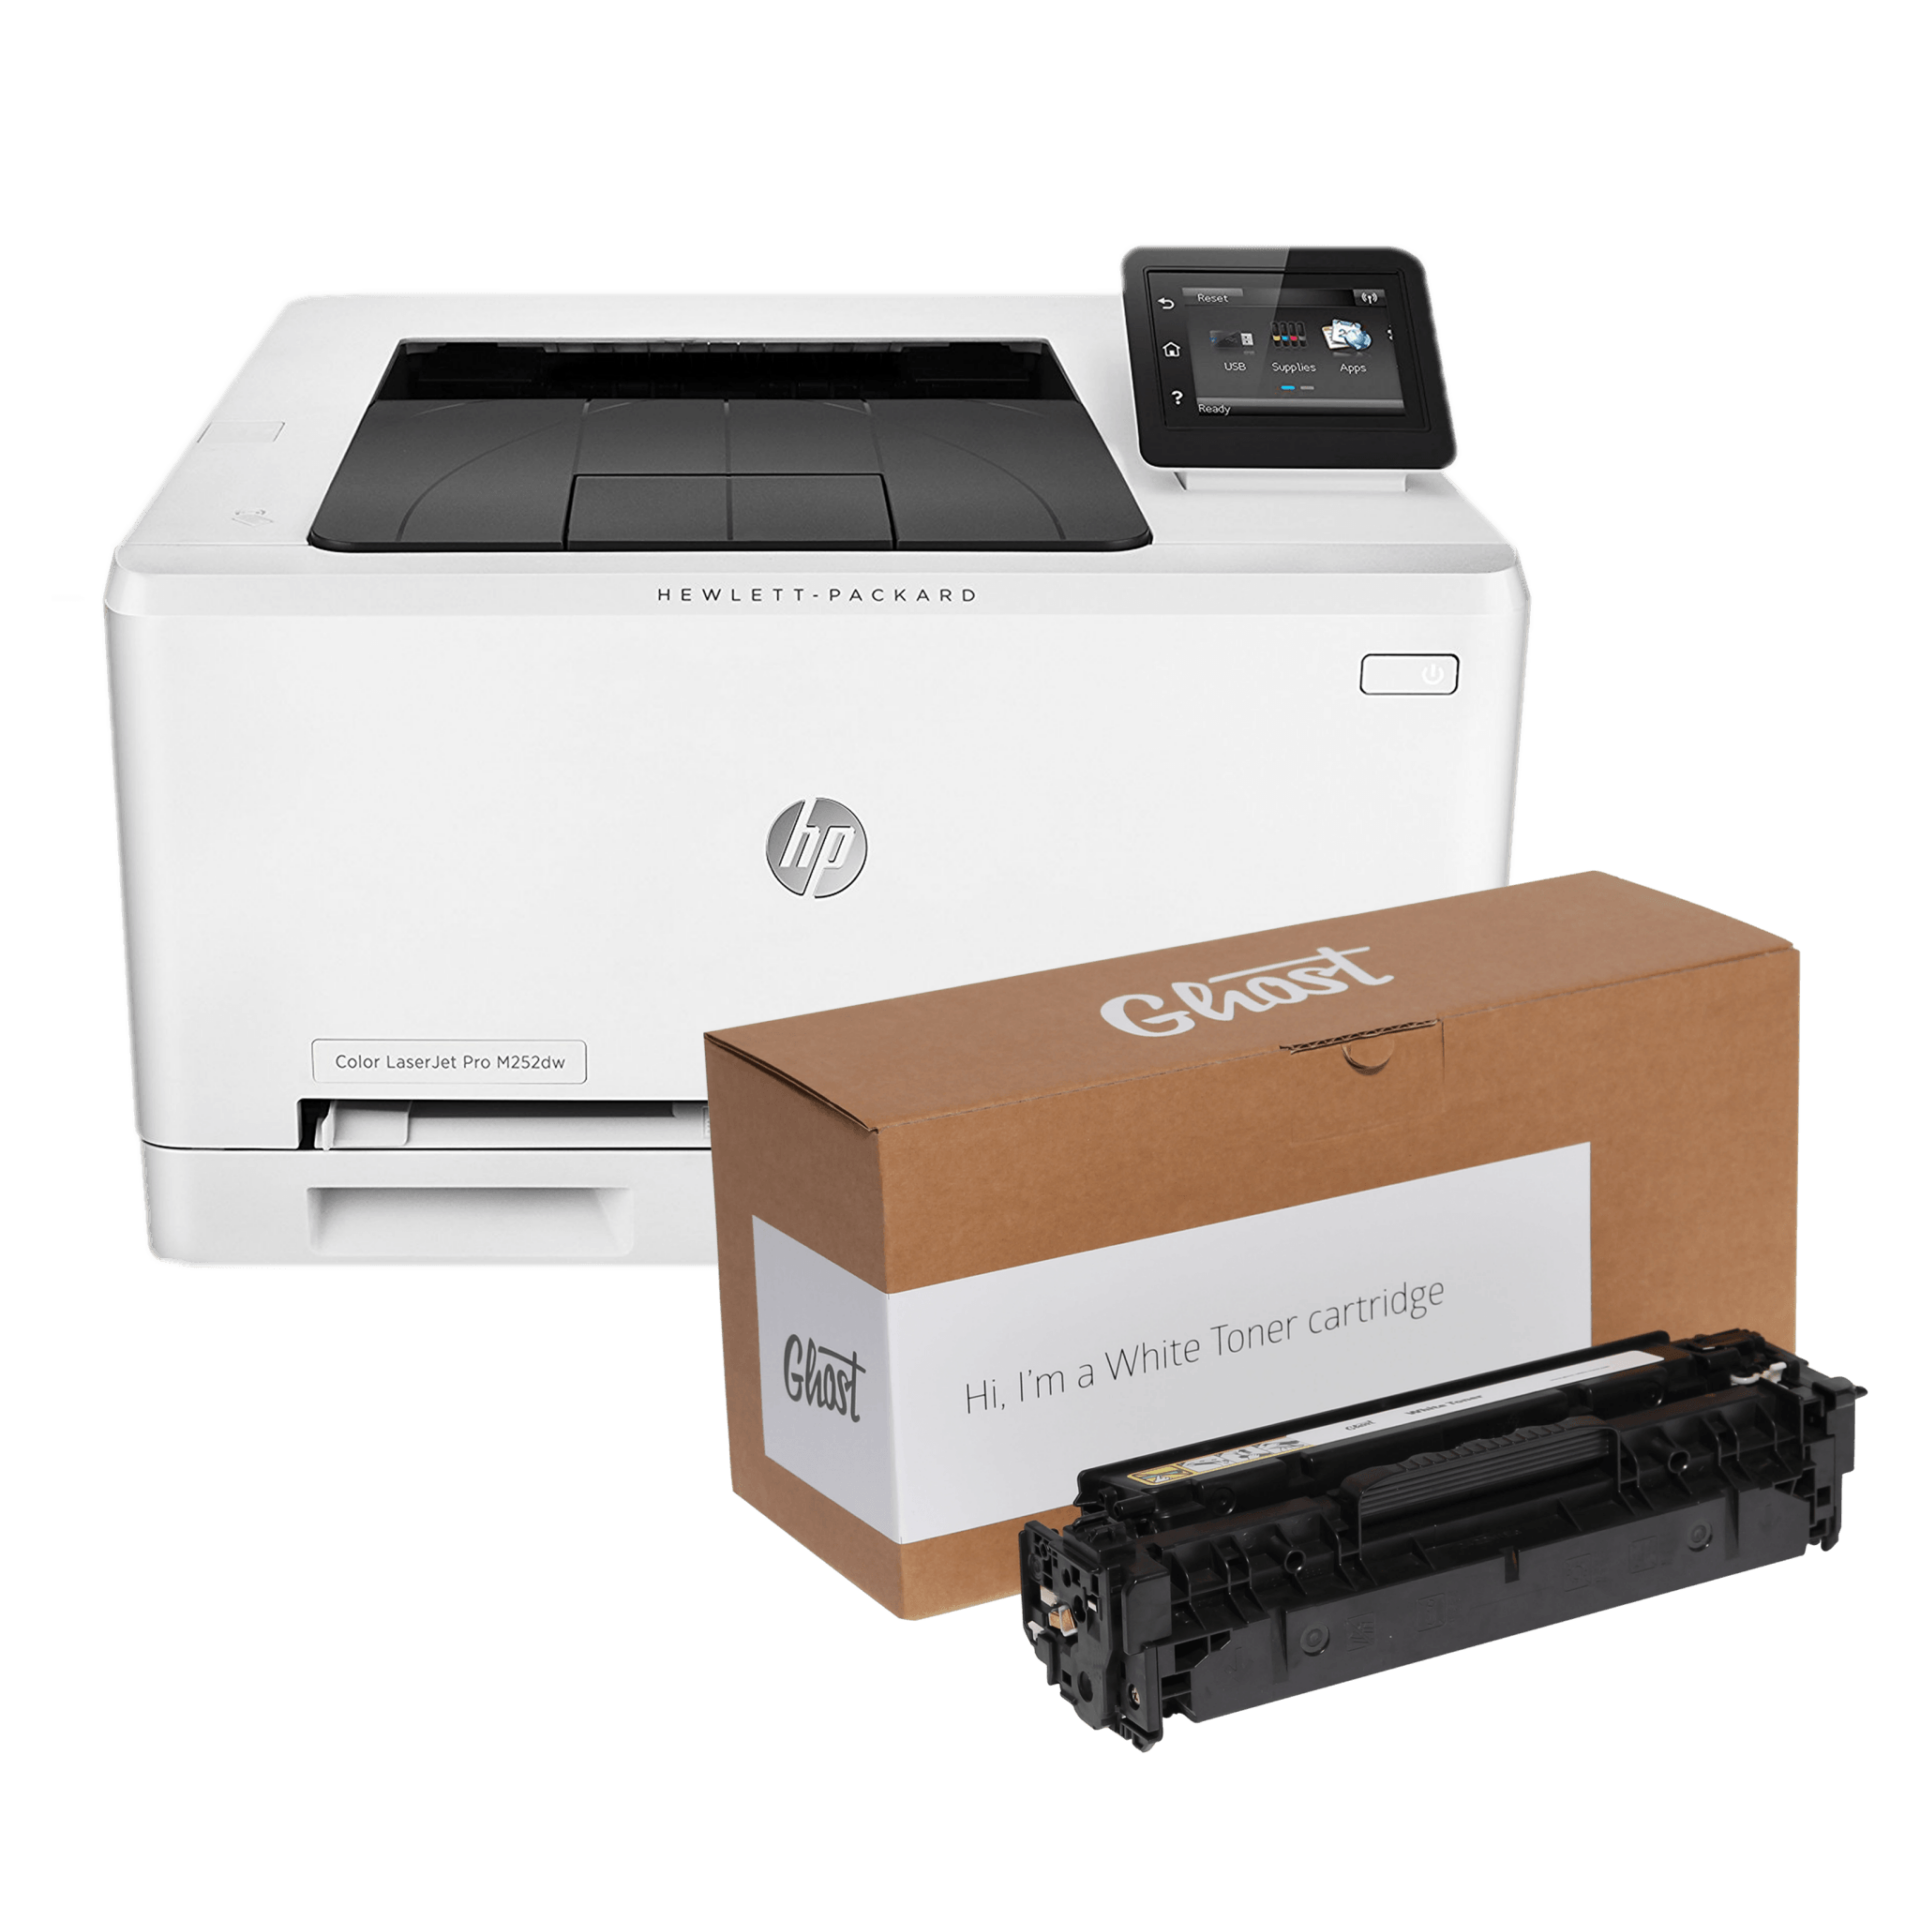 Ghost Printer Bundle with White Toner